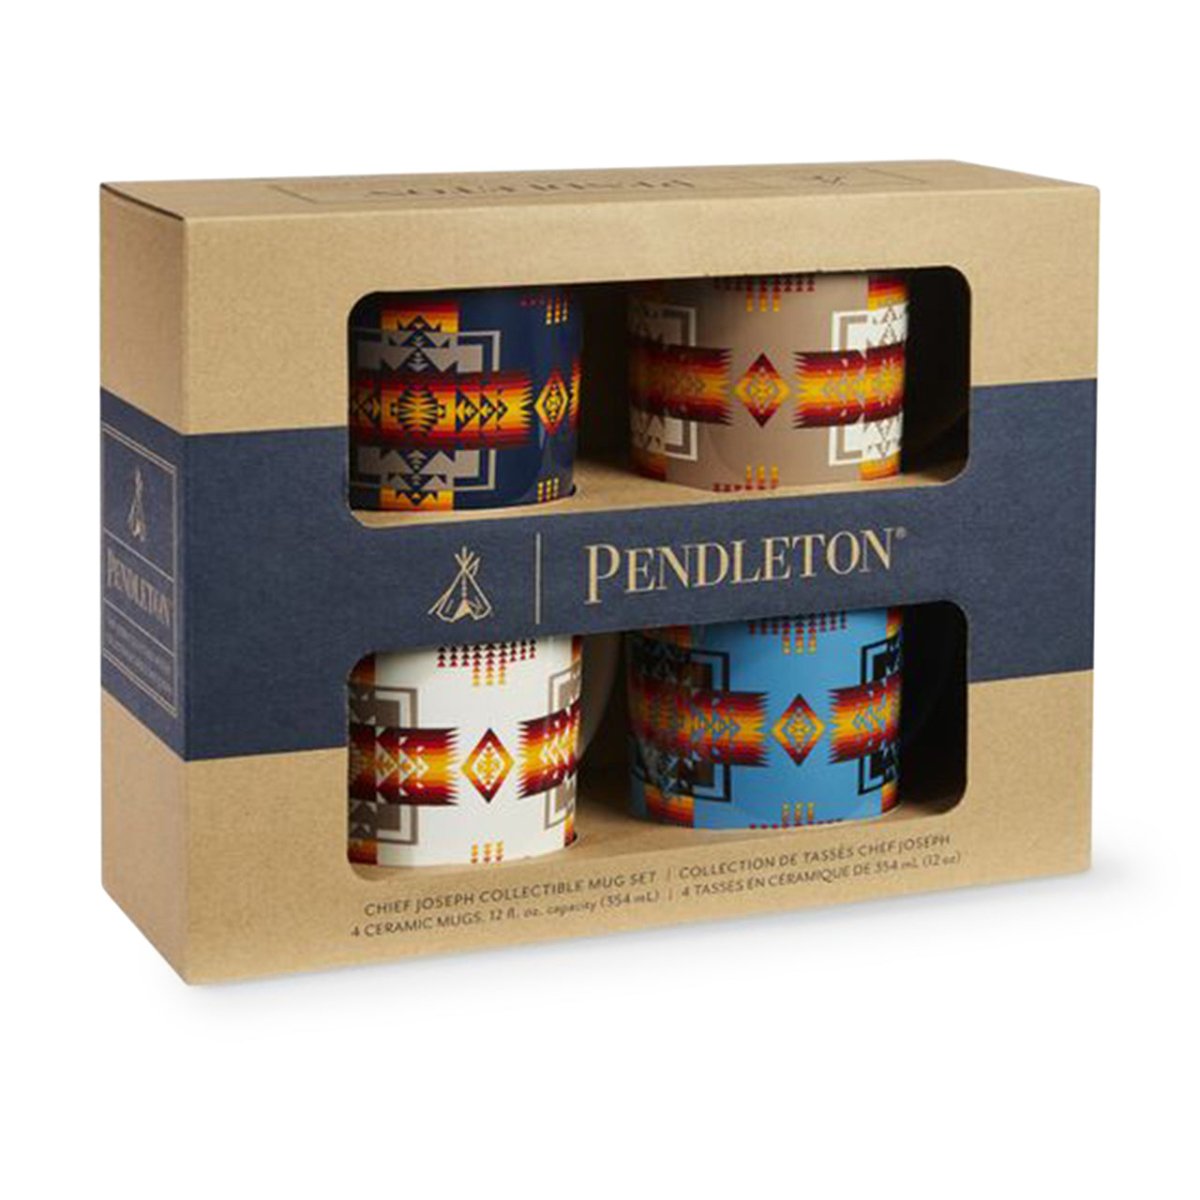 Pendleton 'Chief Joseph' Collectible Ceramic Mug Set (Multi)  - Allike Store